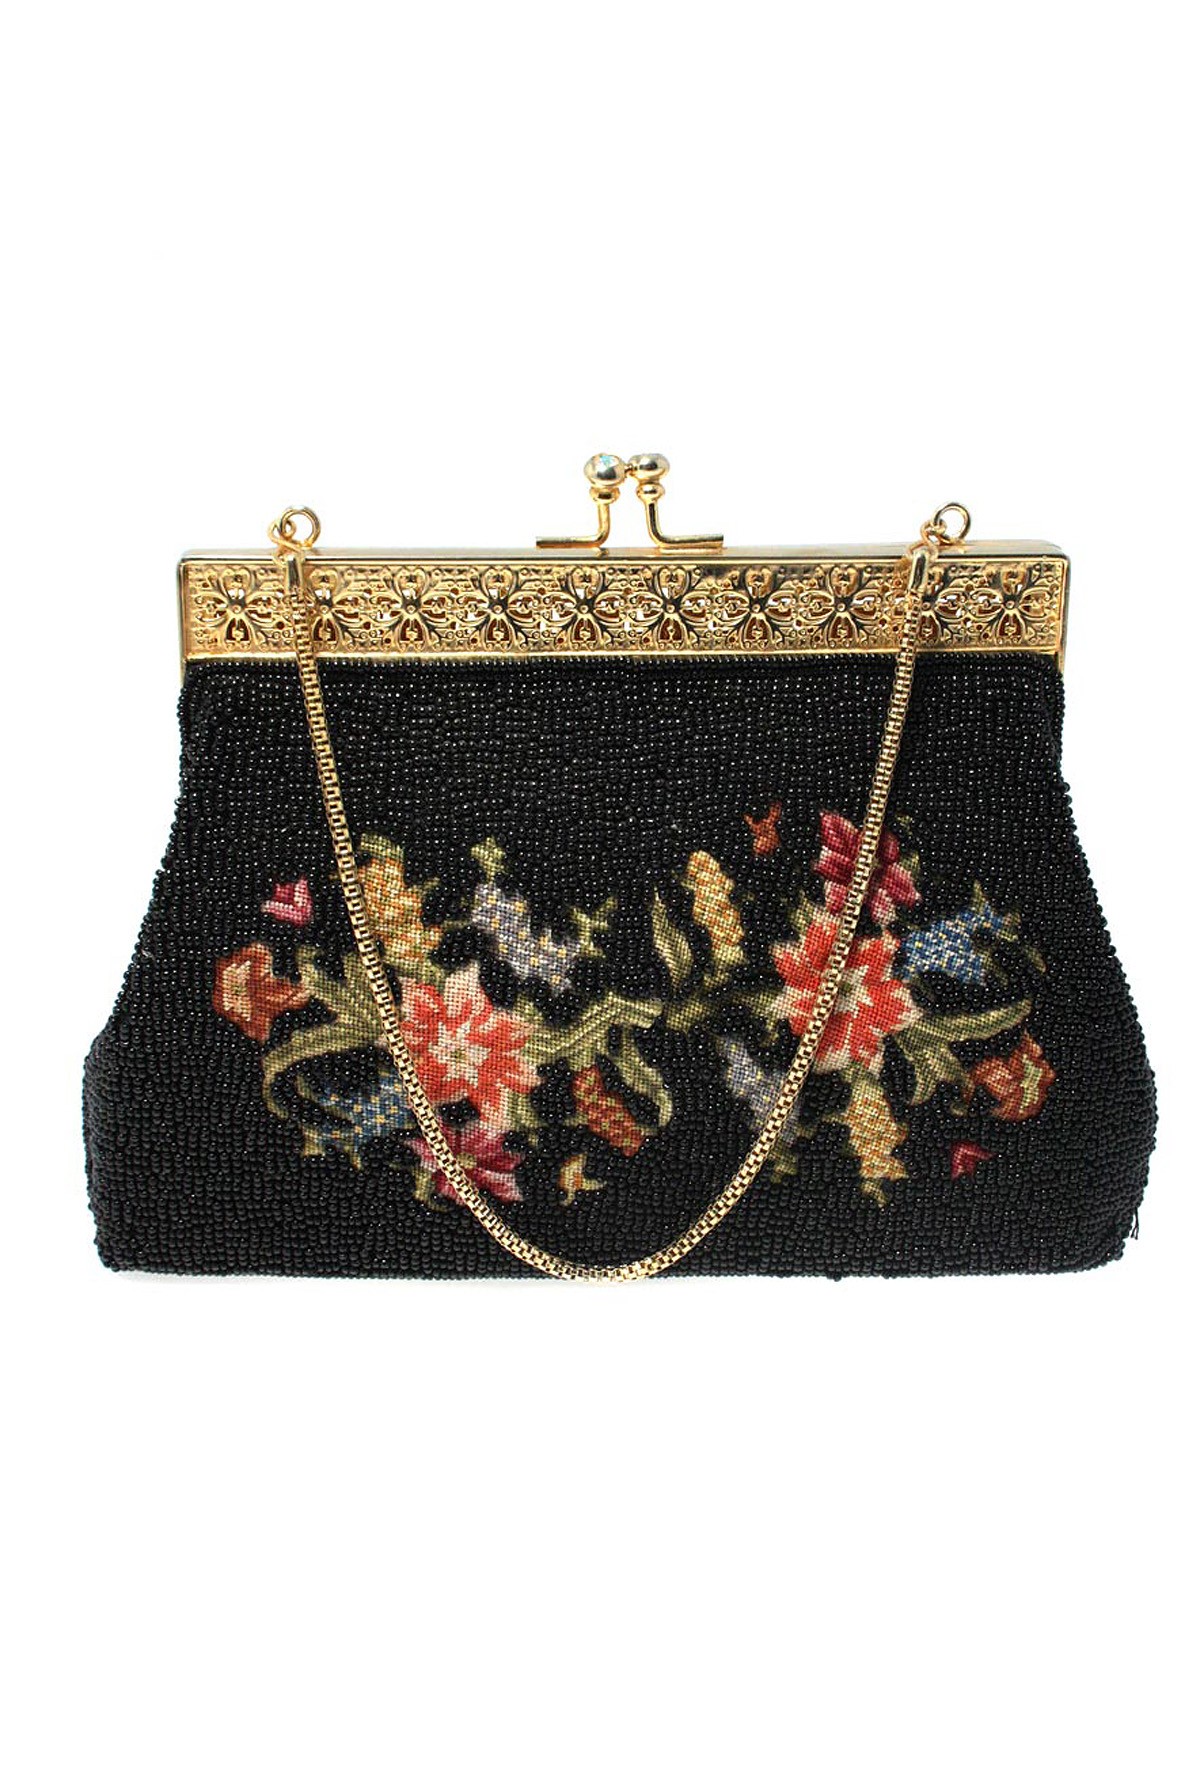 Vintage Floral Beaded Handbag - 1960s Tote Bag